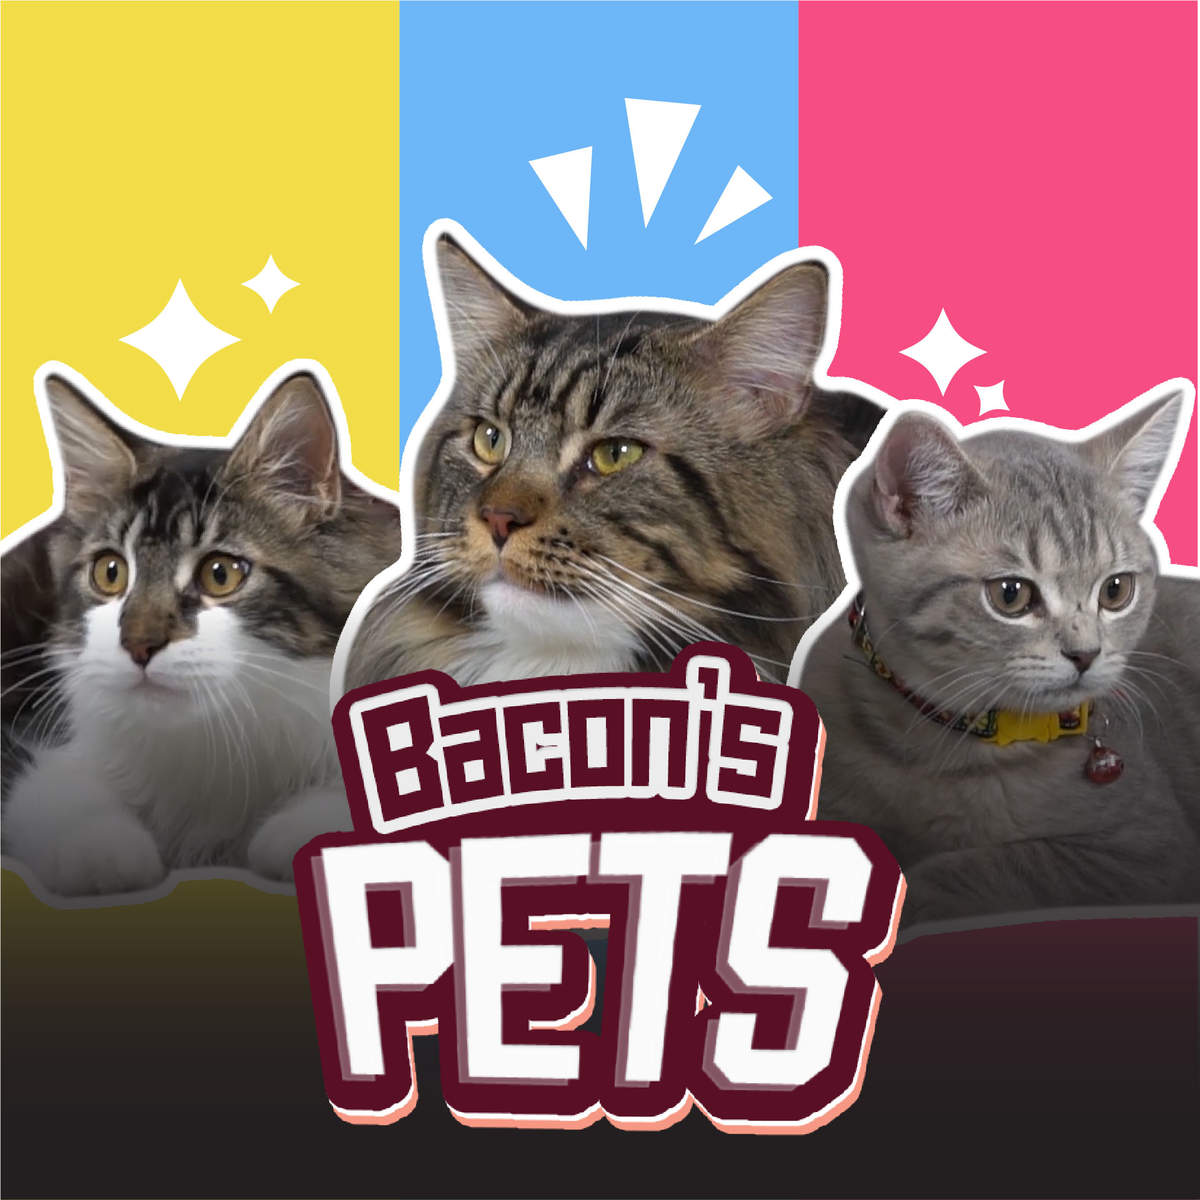 Bacon's Pet